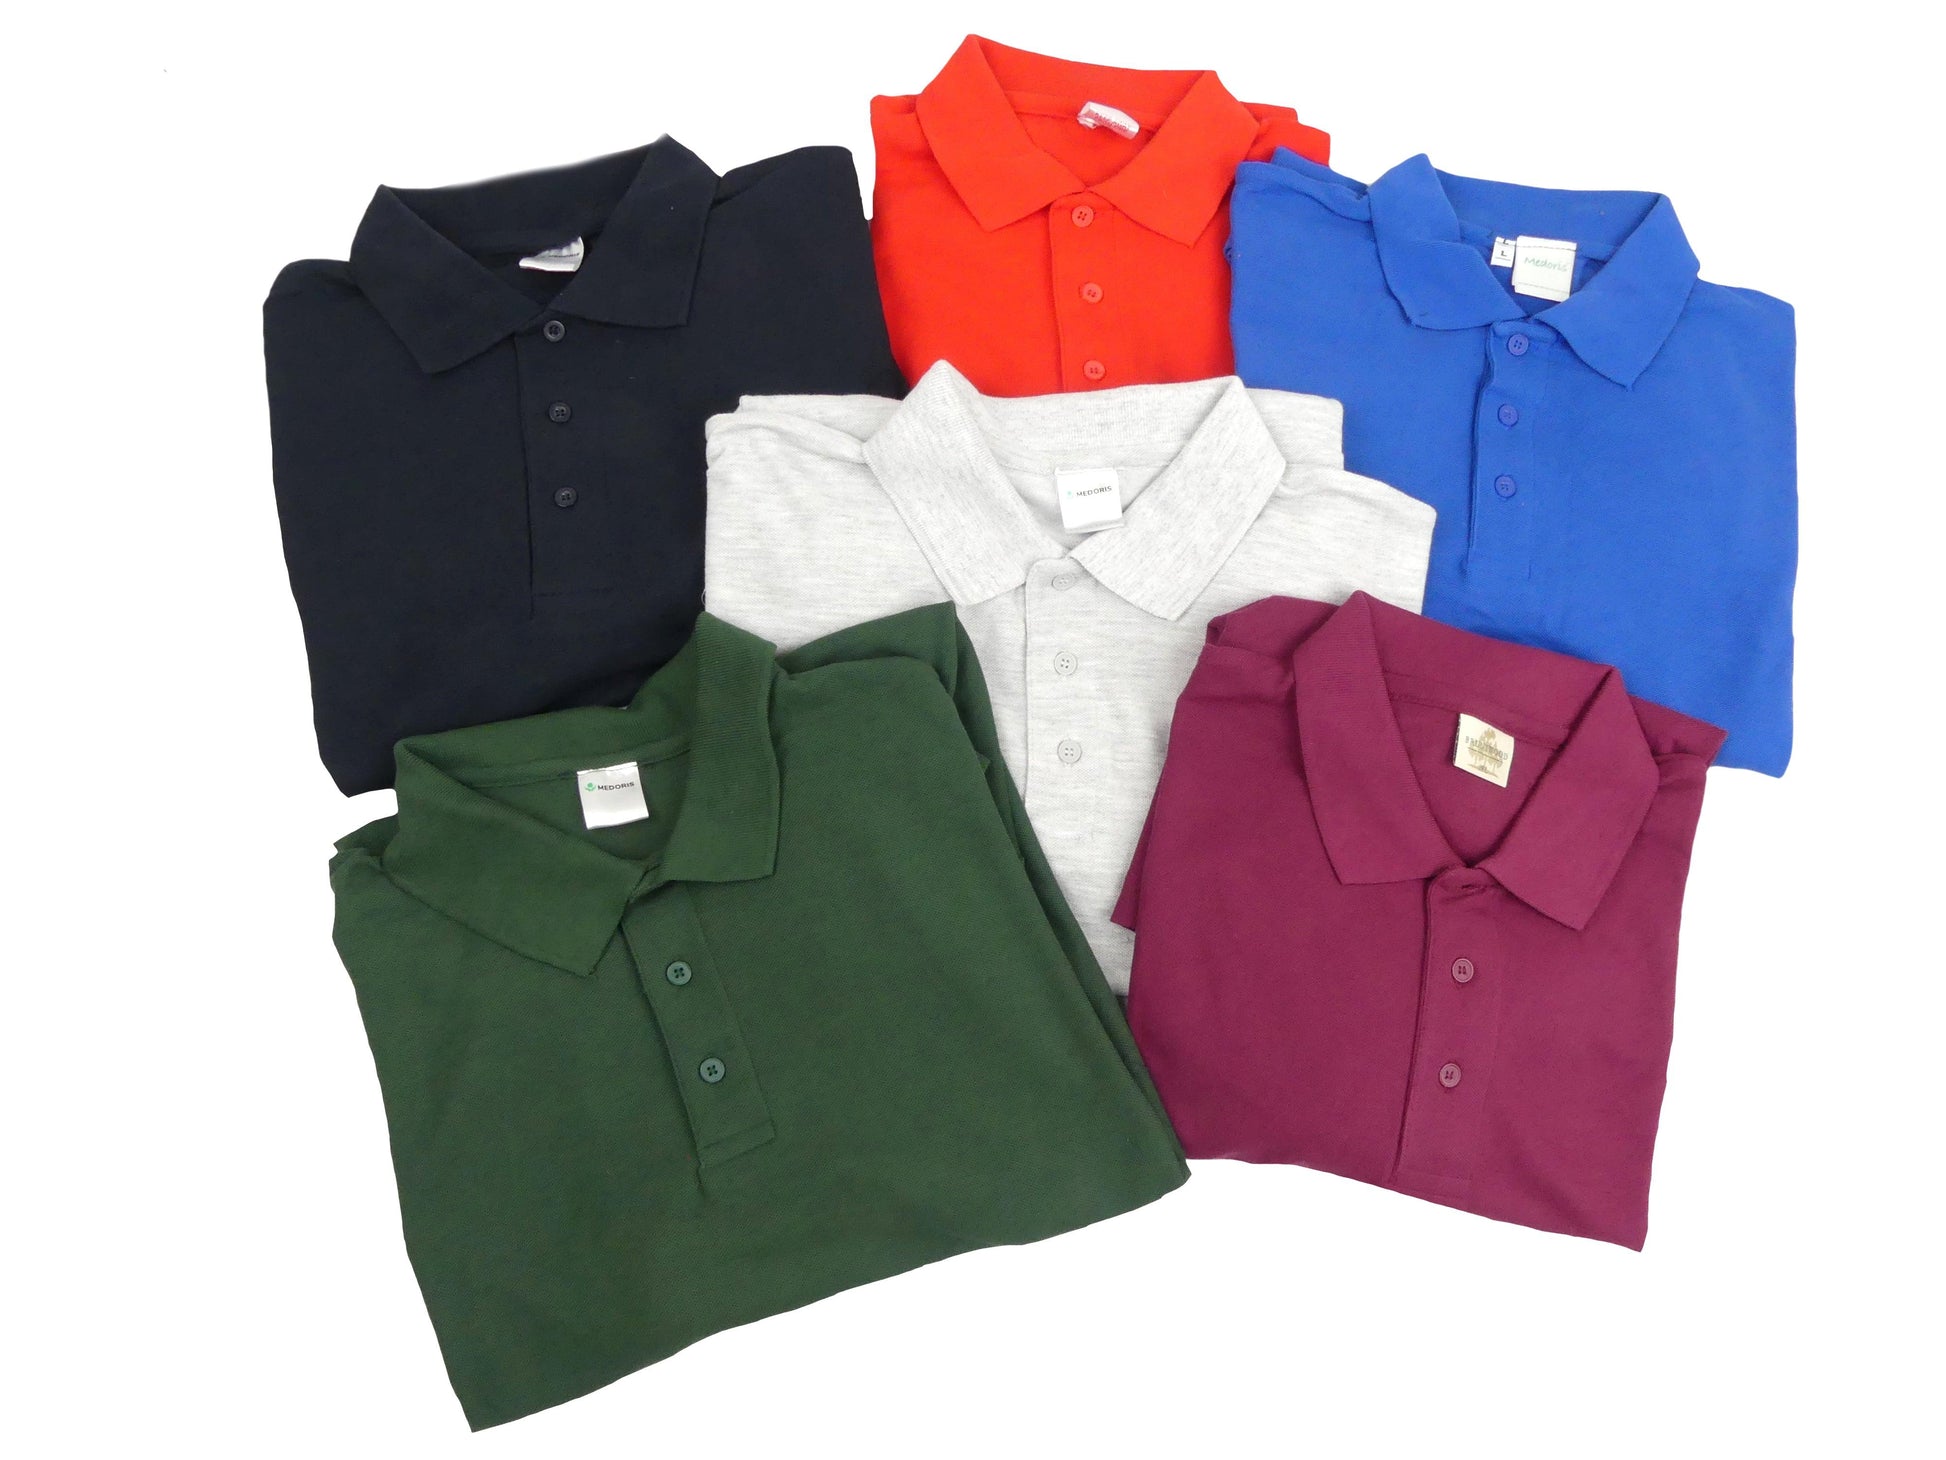 Men's polo zipped tshirt/M038 - MEDORIS